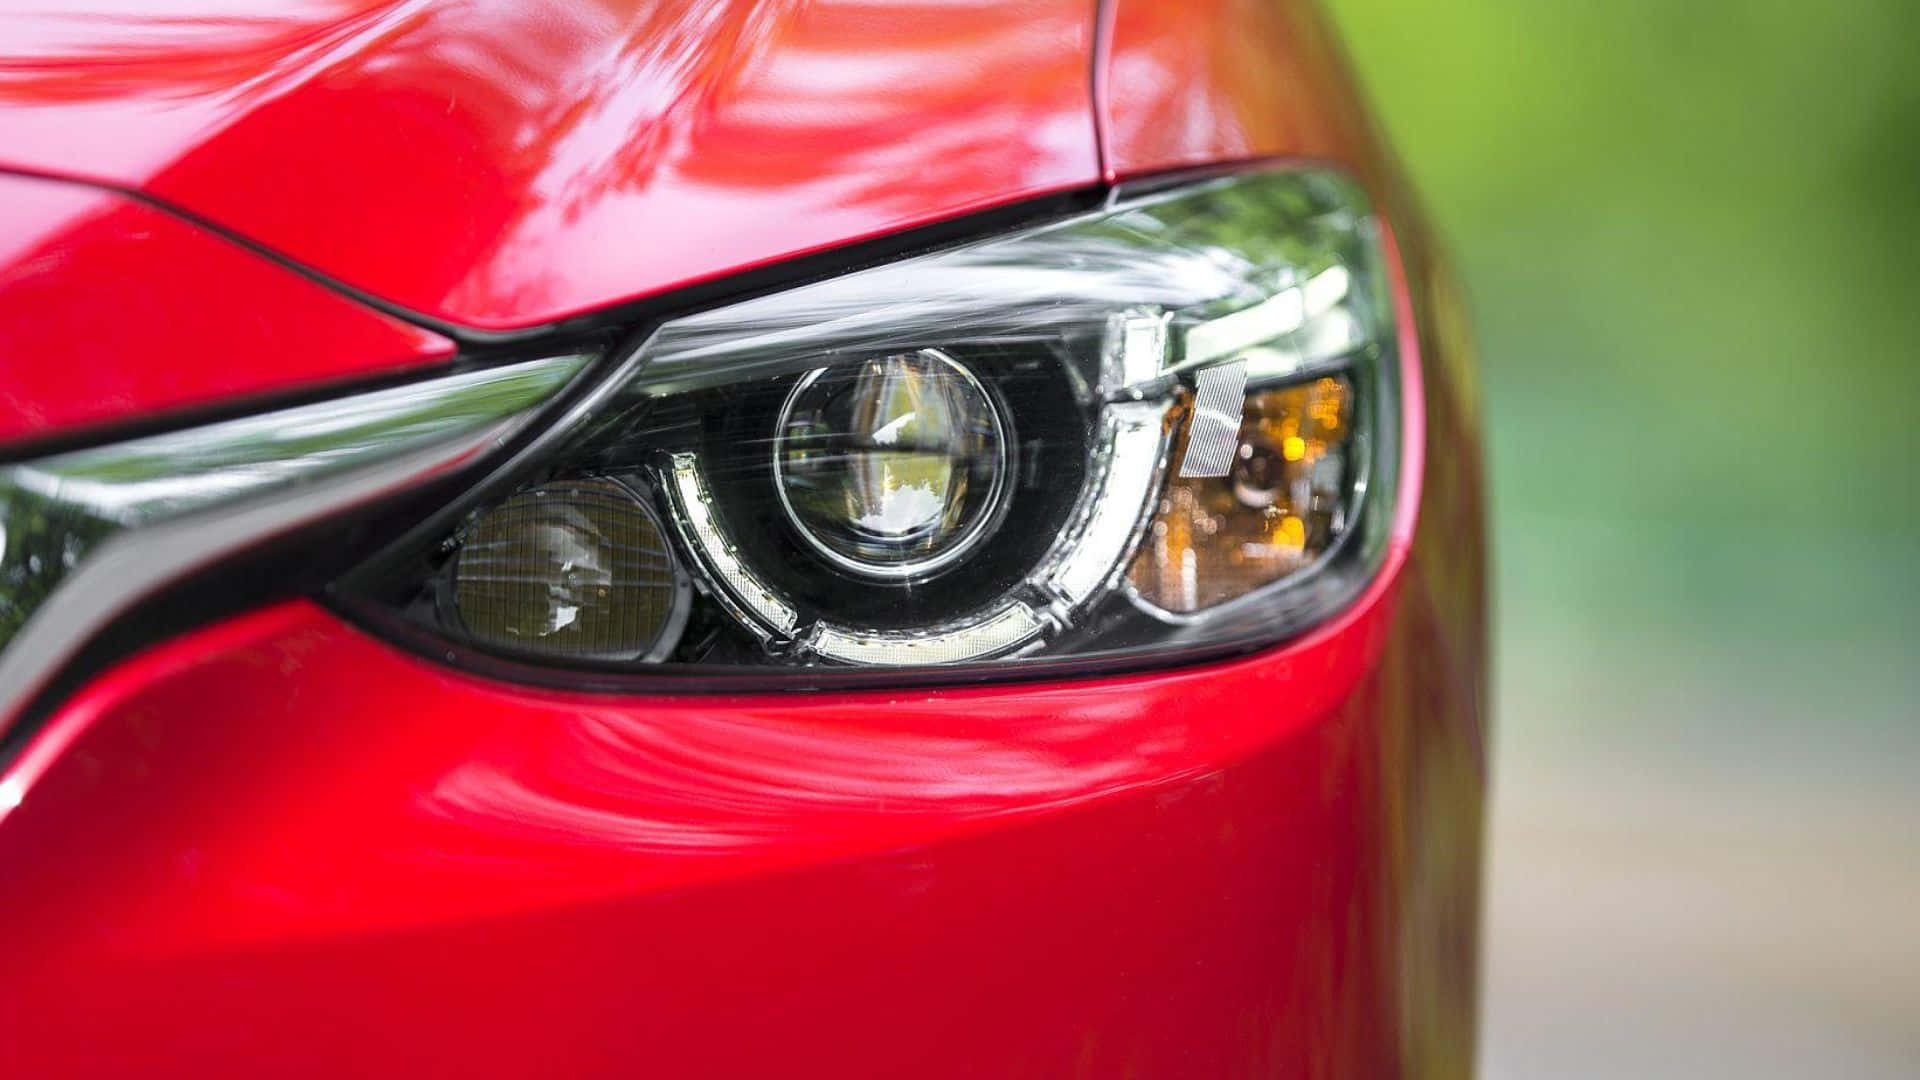 Captivating Mazda 6 in Action Wallpaper